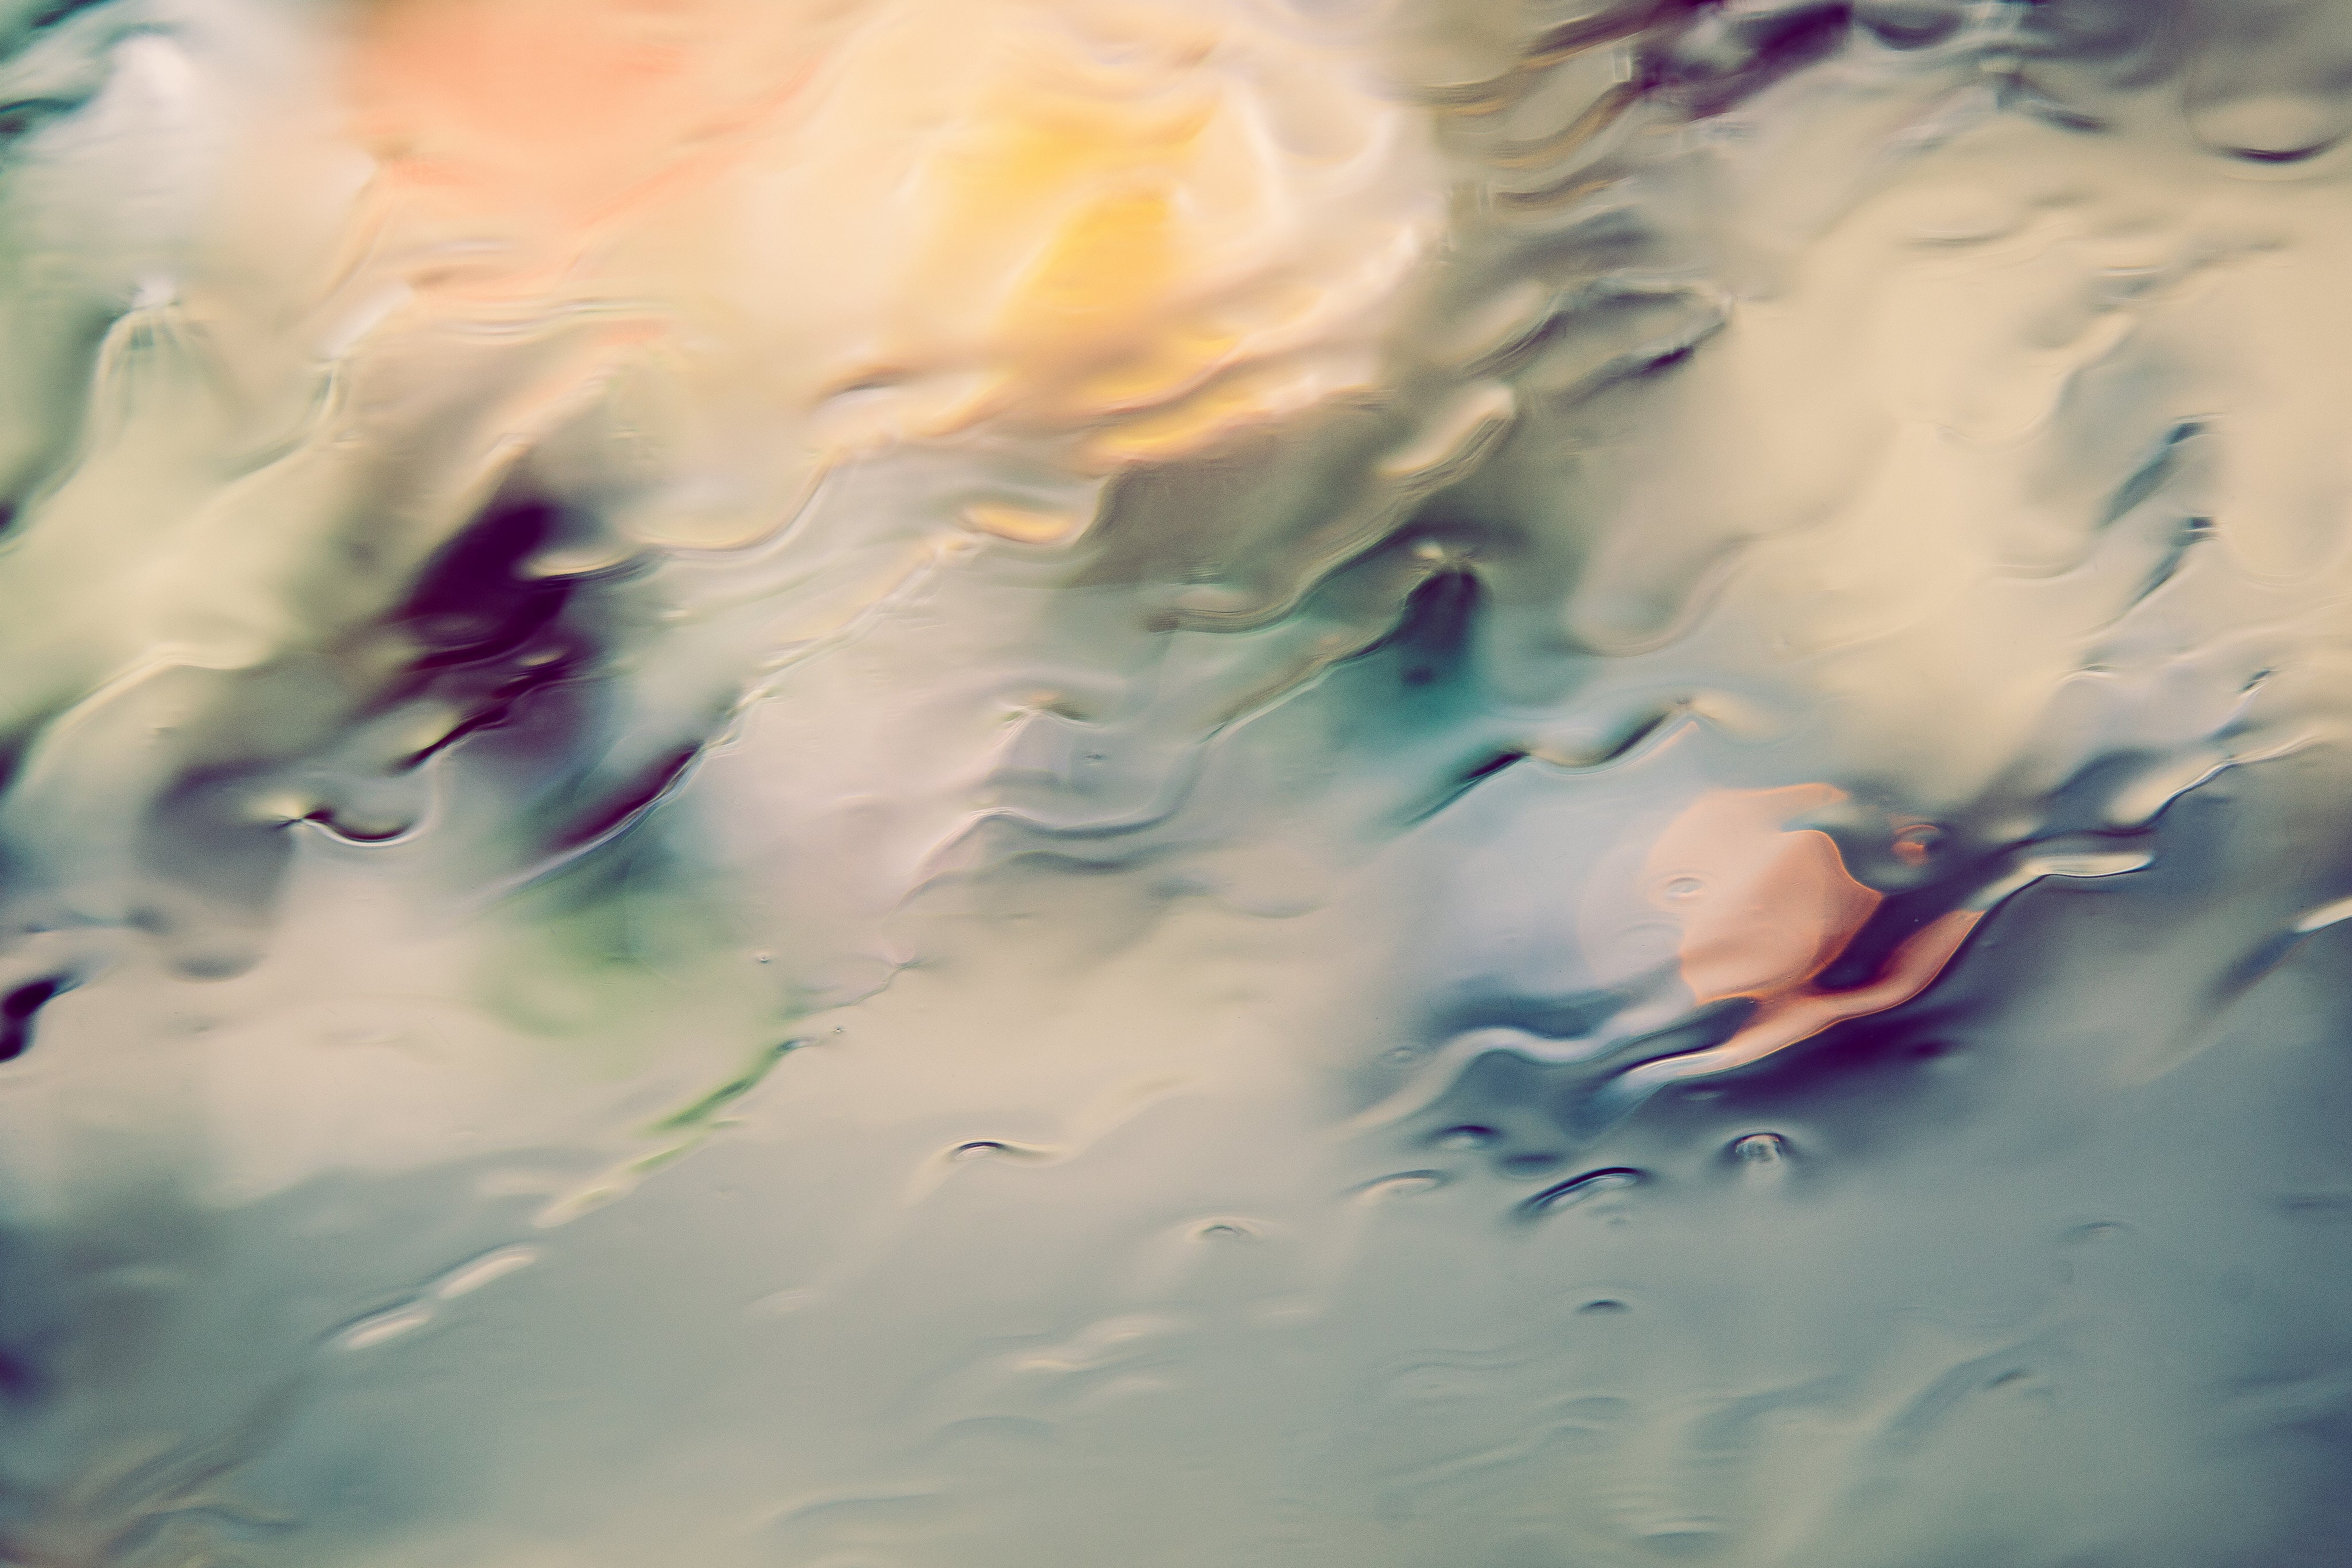 files/rain-coming-down-window.jpg